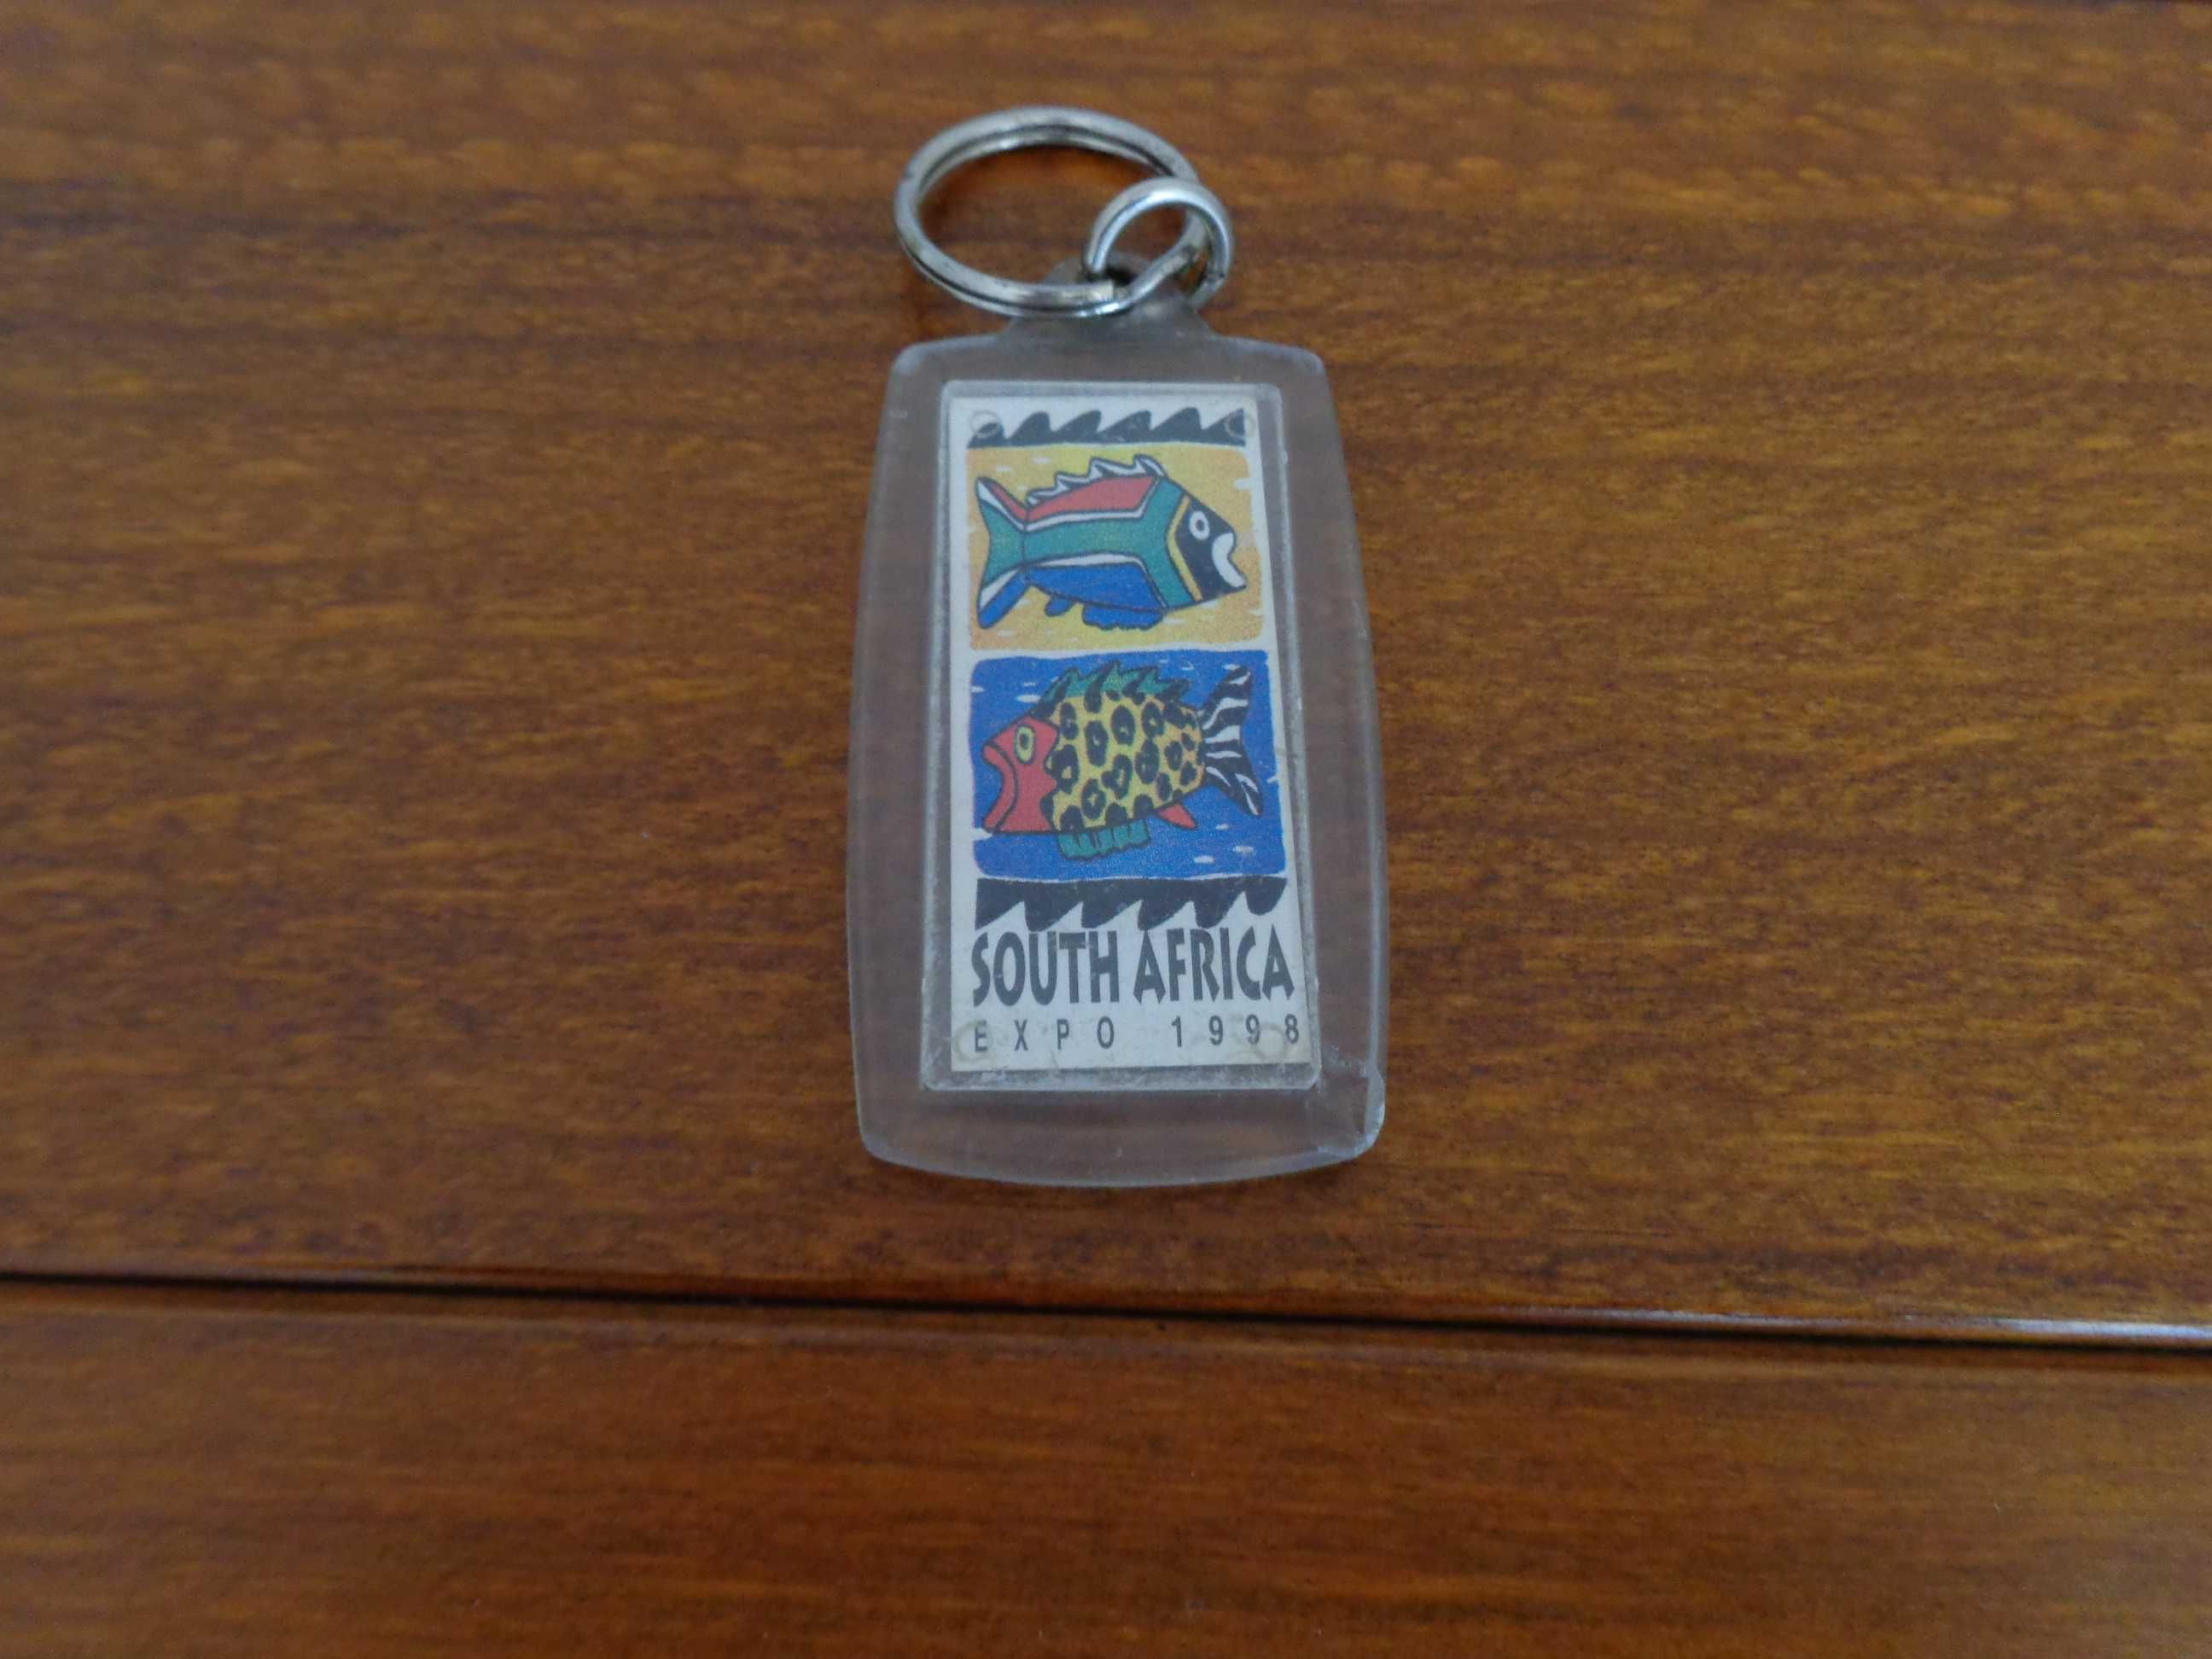 Porta - chaves Expo 98, para colecionadores